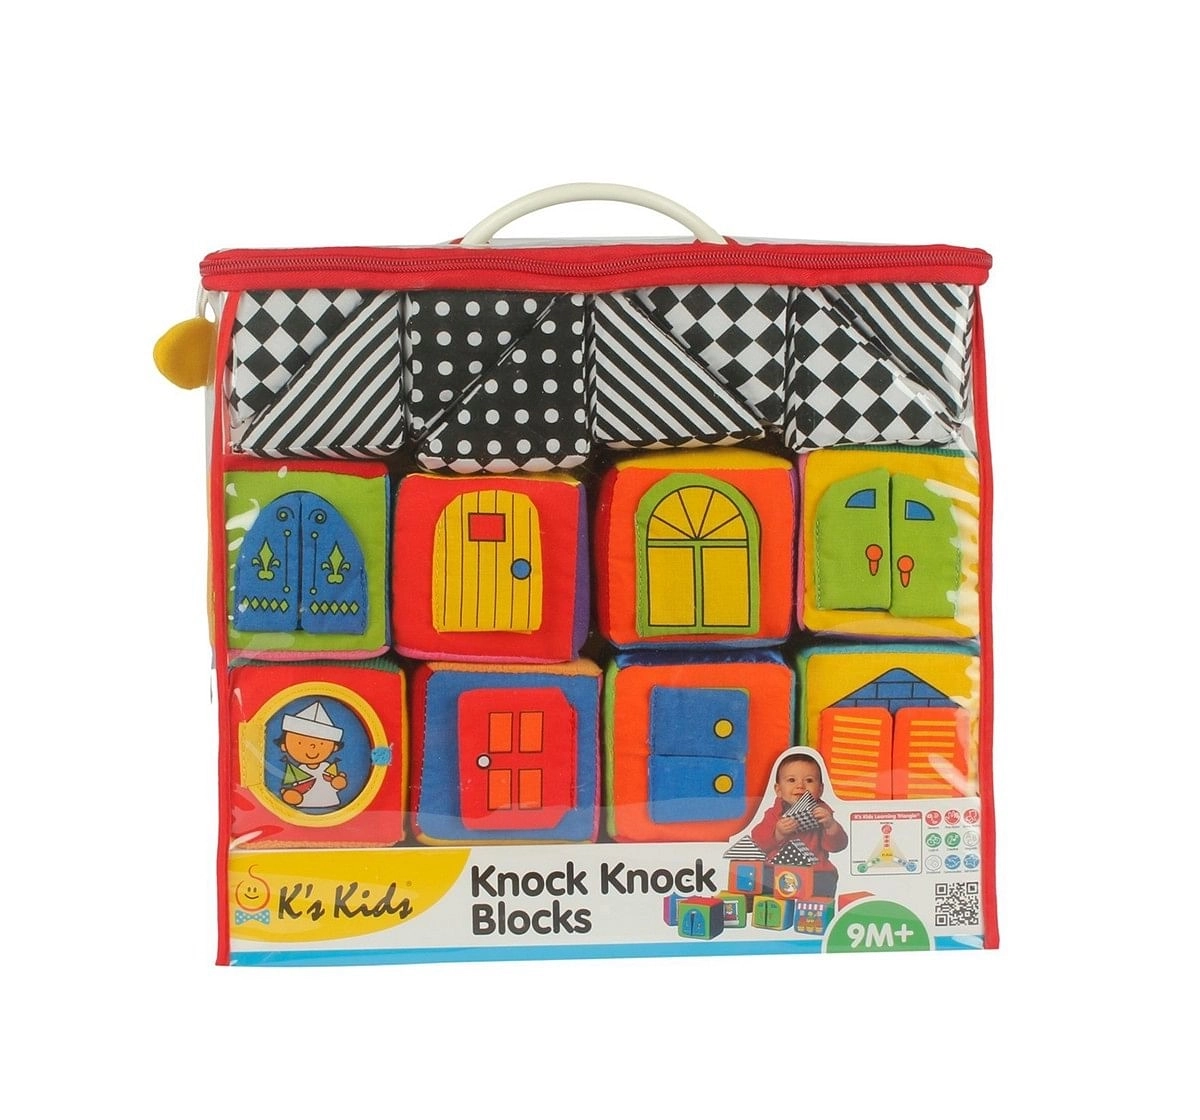 K'S Kids Knock Knock Blocks Early Learner Toys for Kids age 24M+ 